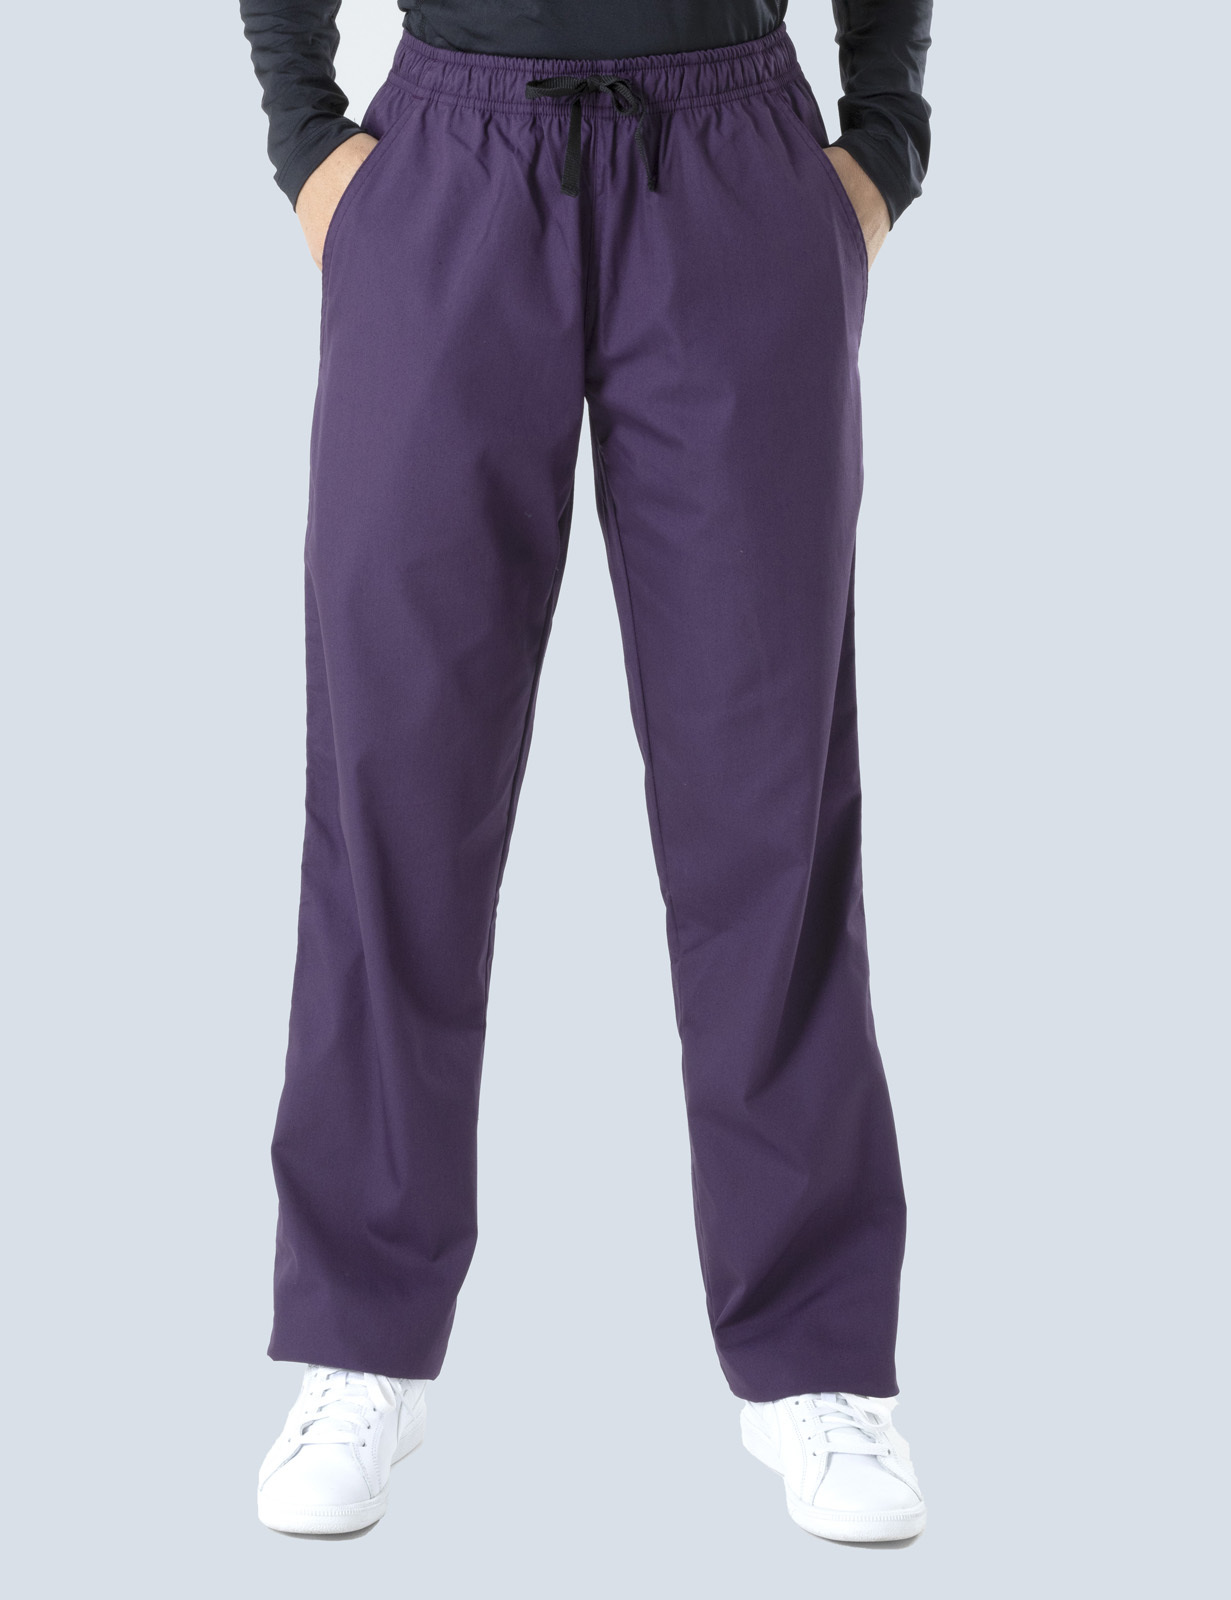 Women's Regular Cut Pants - Aubergine - 2X Large